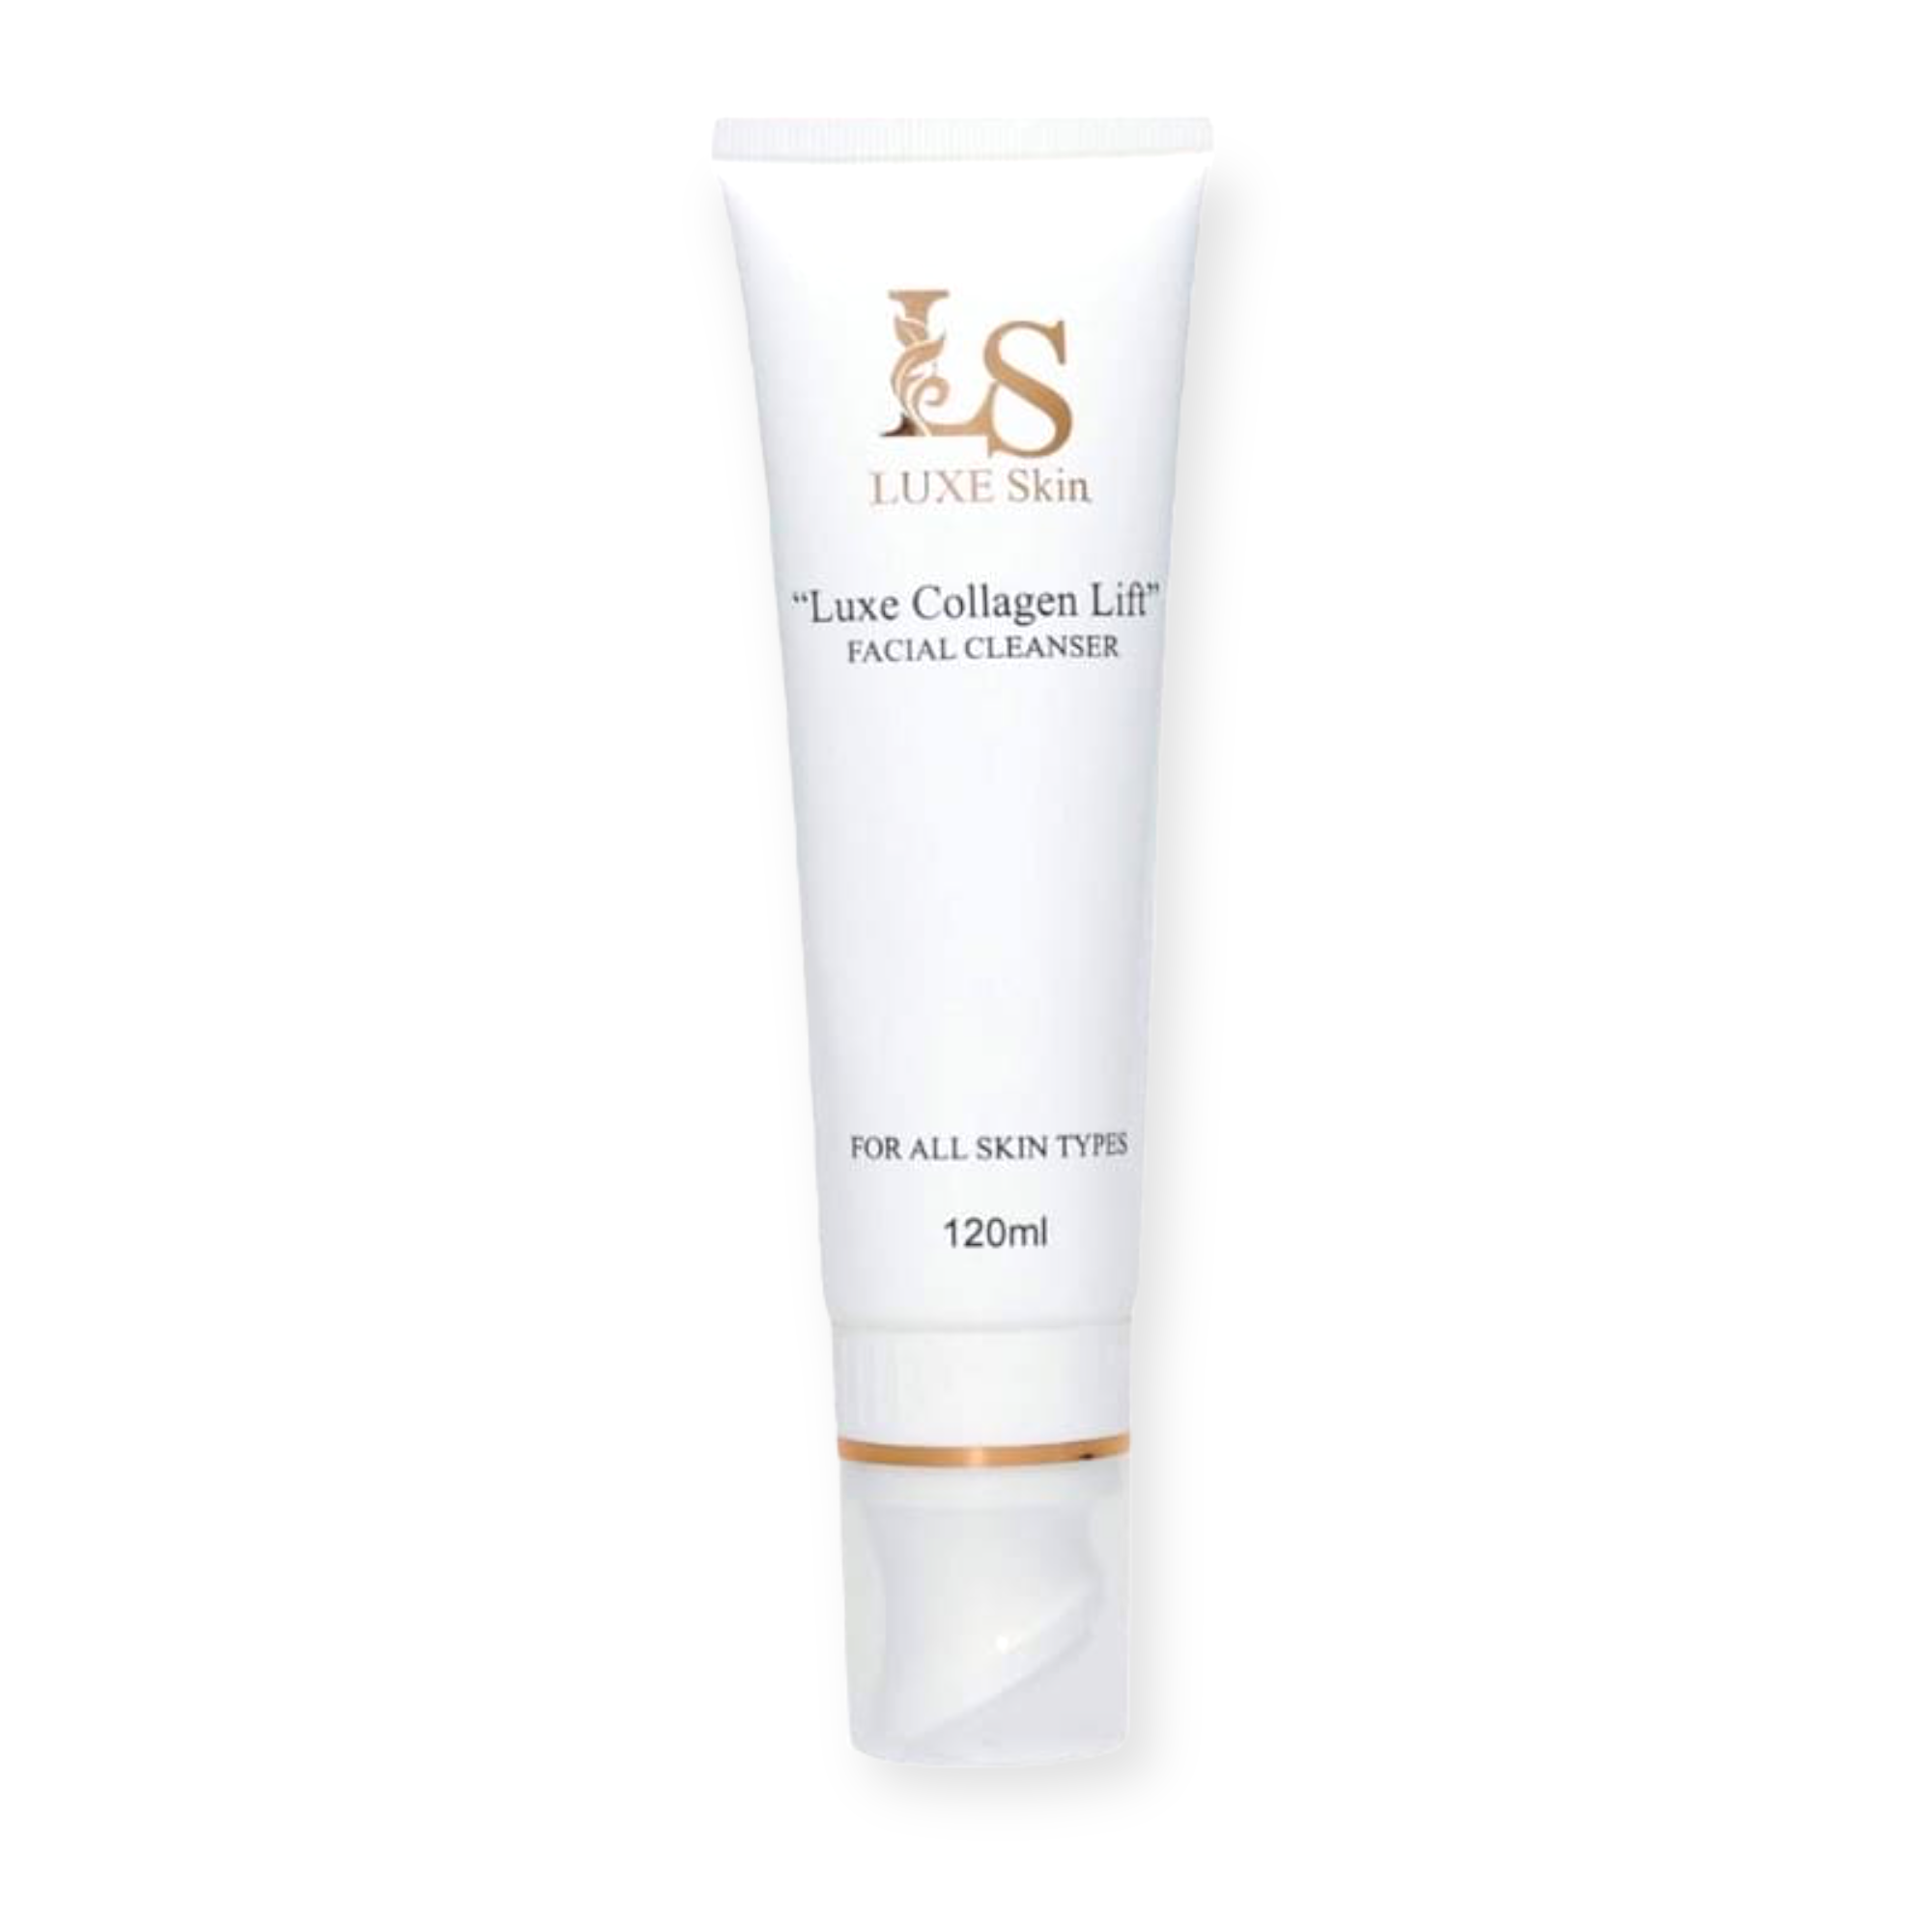 Luxe Skin - Luxe Collagen Lift - Facial Cleanser 120ml